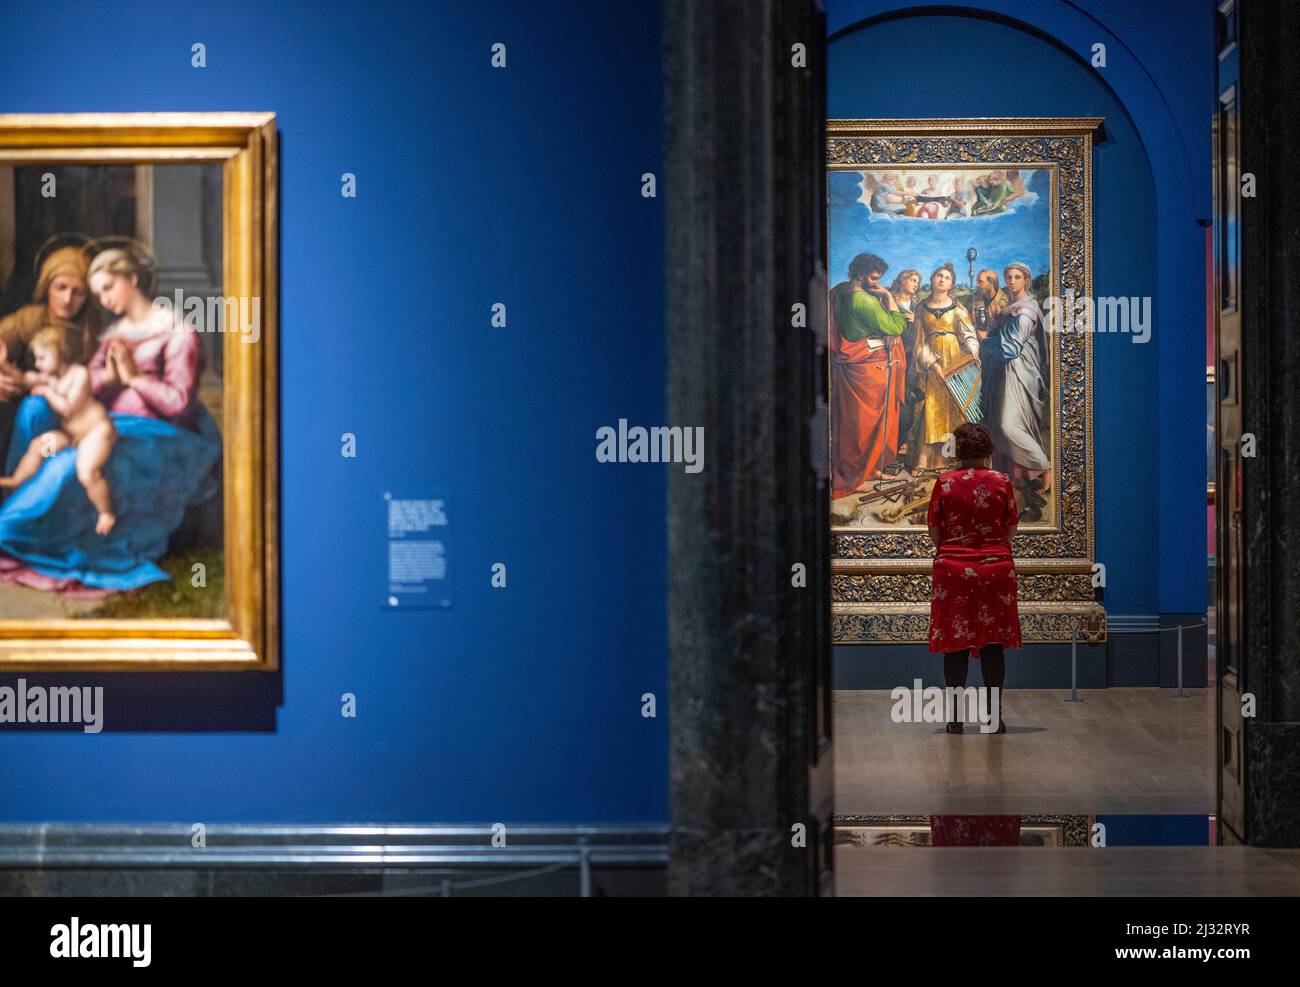 Raphael (1483 - 1520)  National Gallery, London